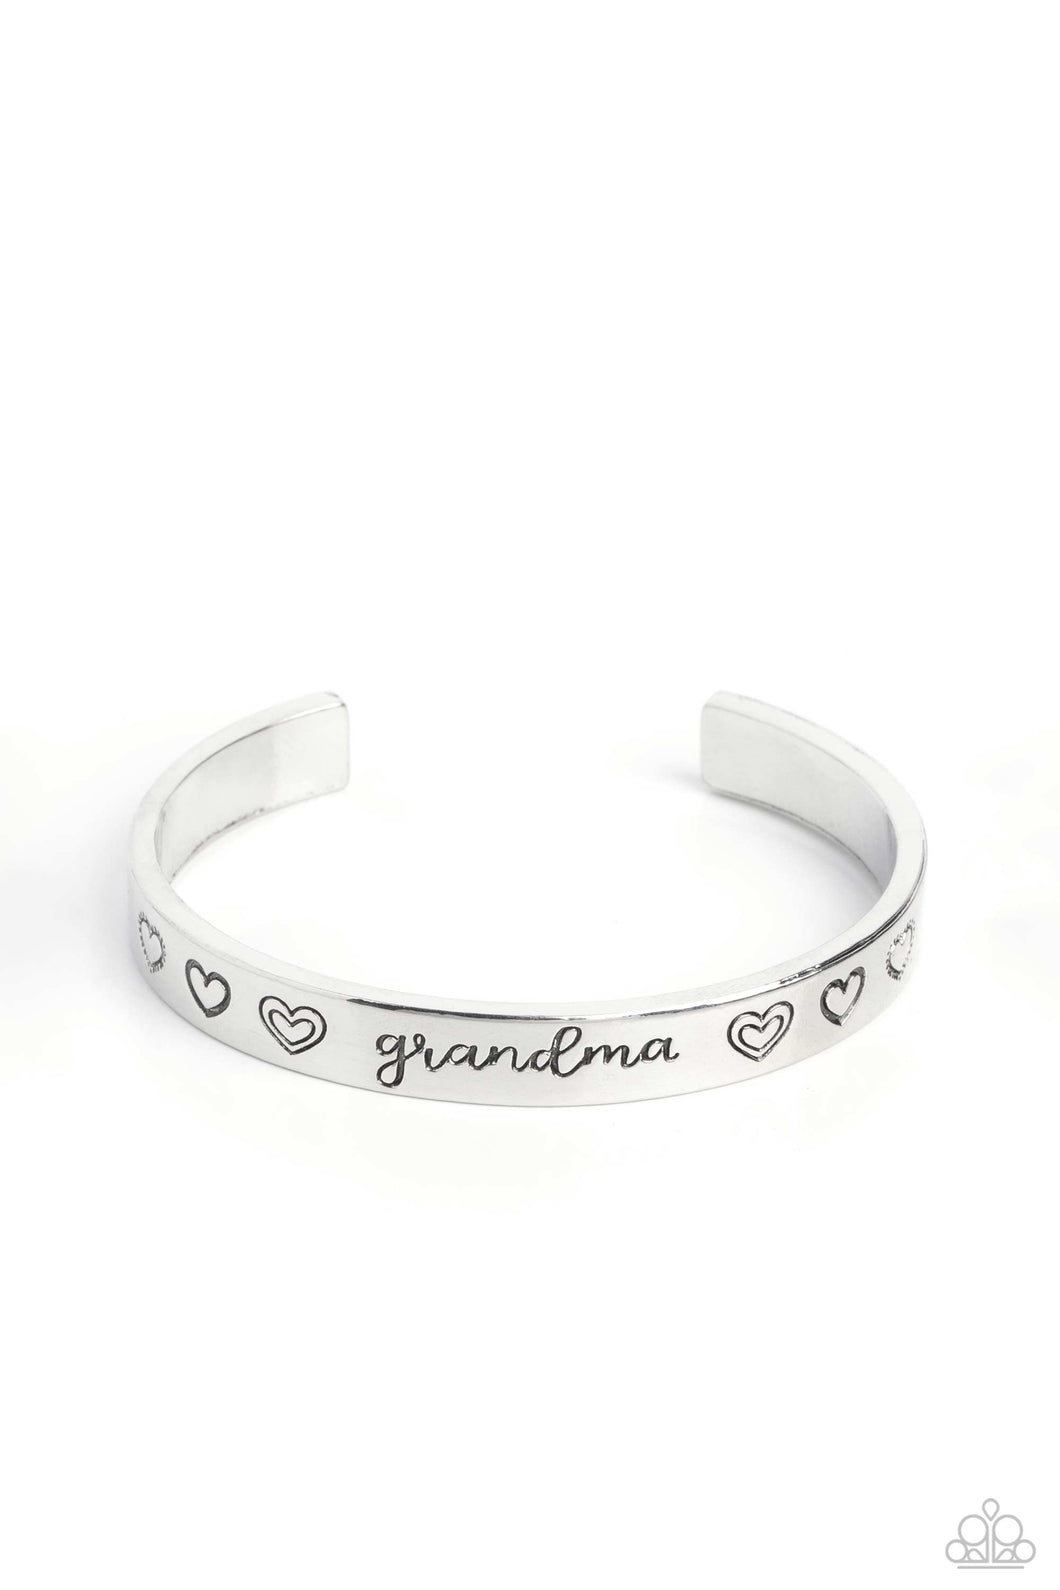 A Grandmothers Love - Silver (Grandma) Bracelet